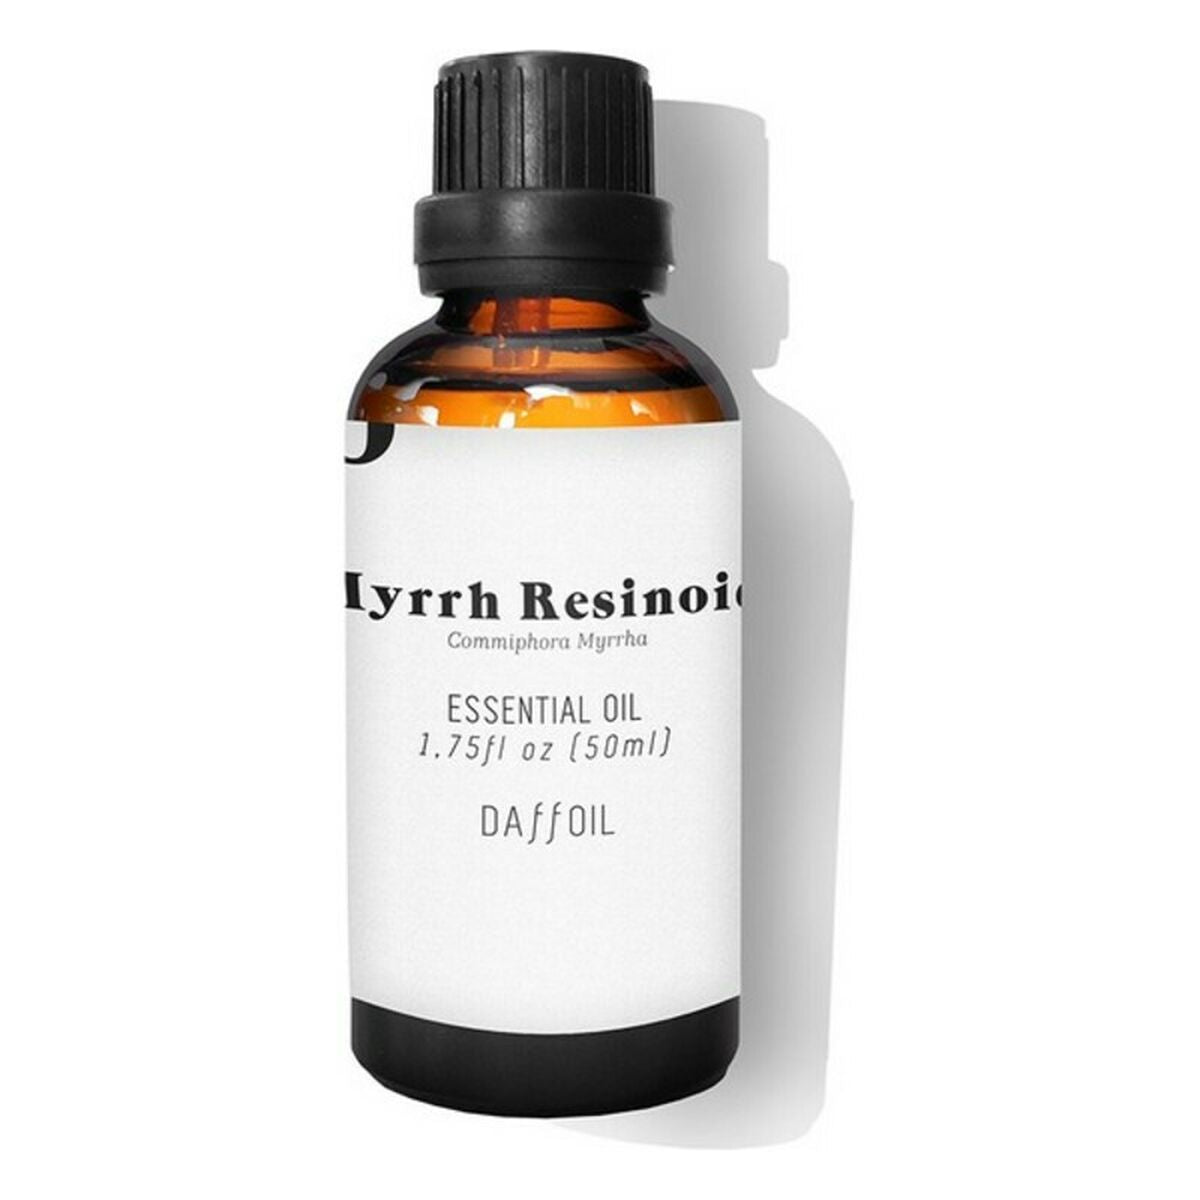 Essential oil Daffoil 50 ml Myrrh